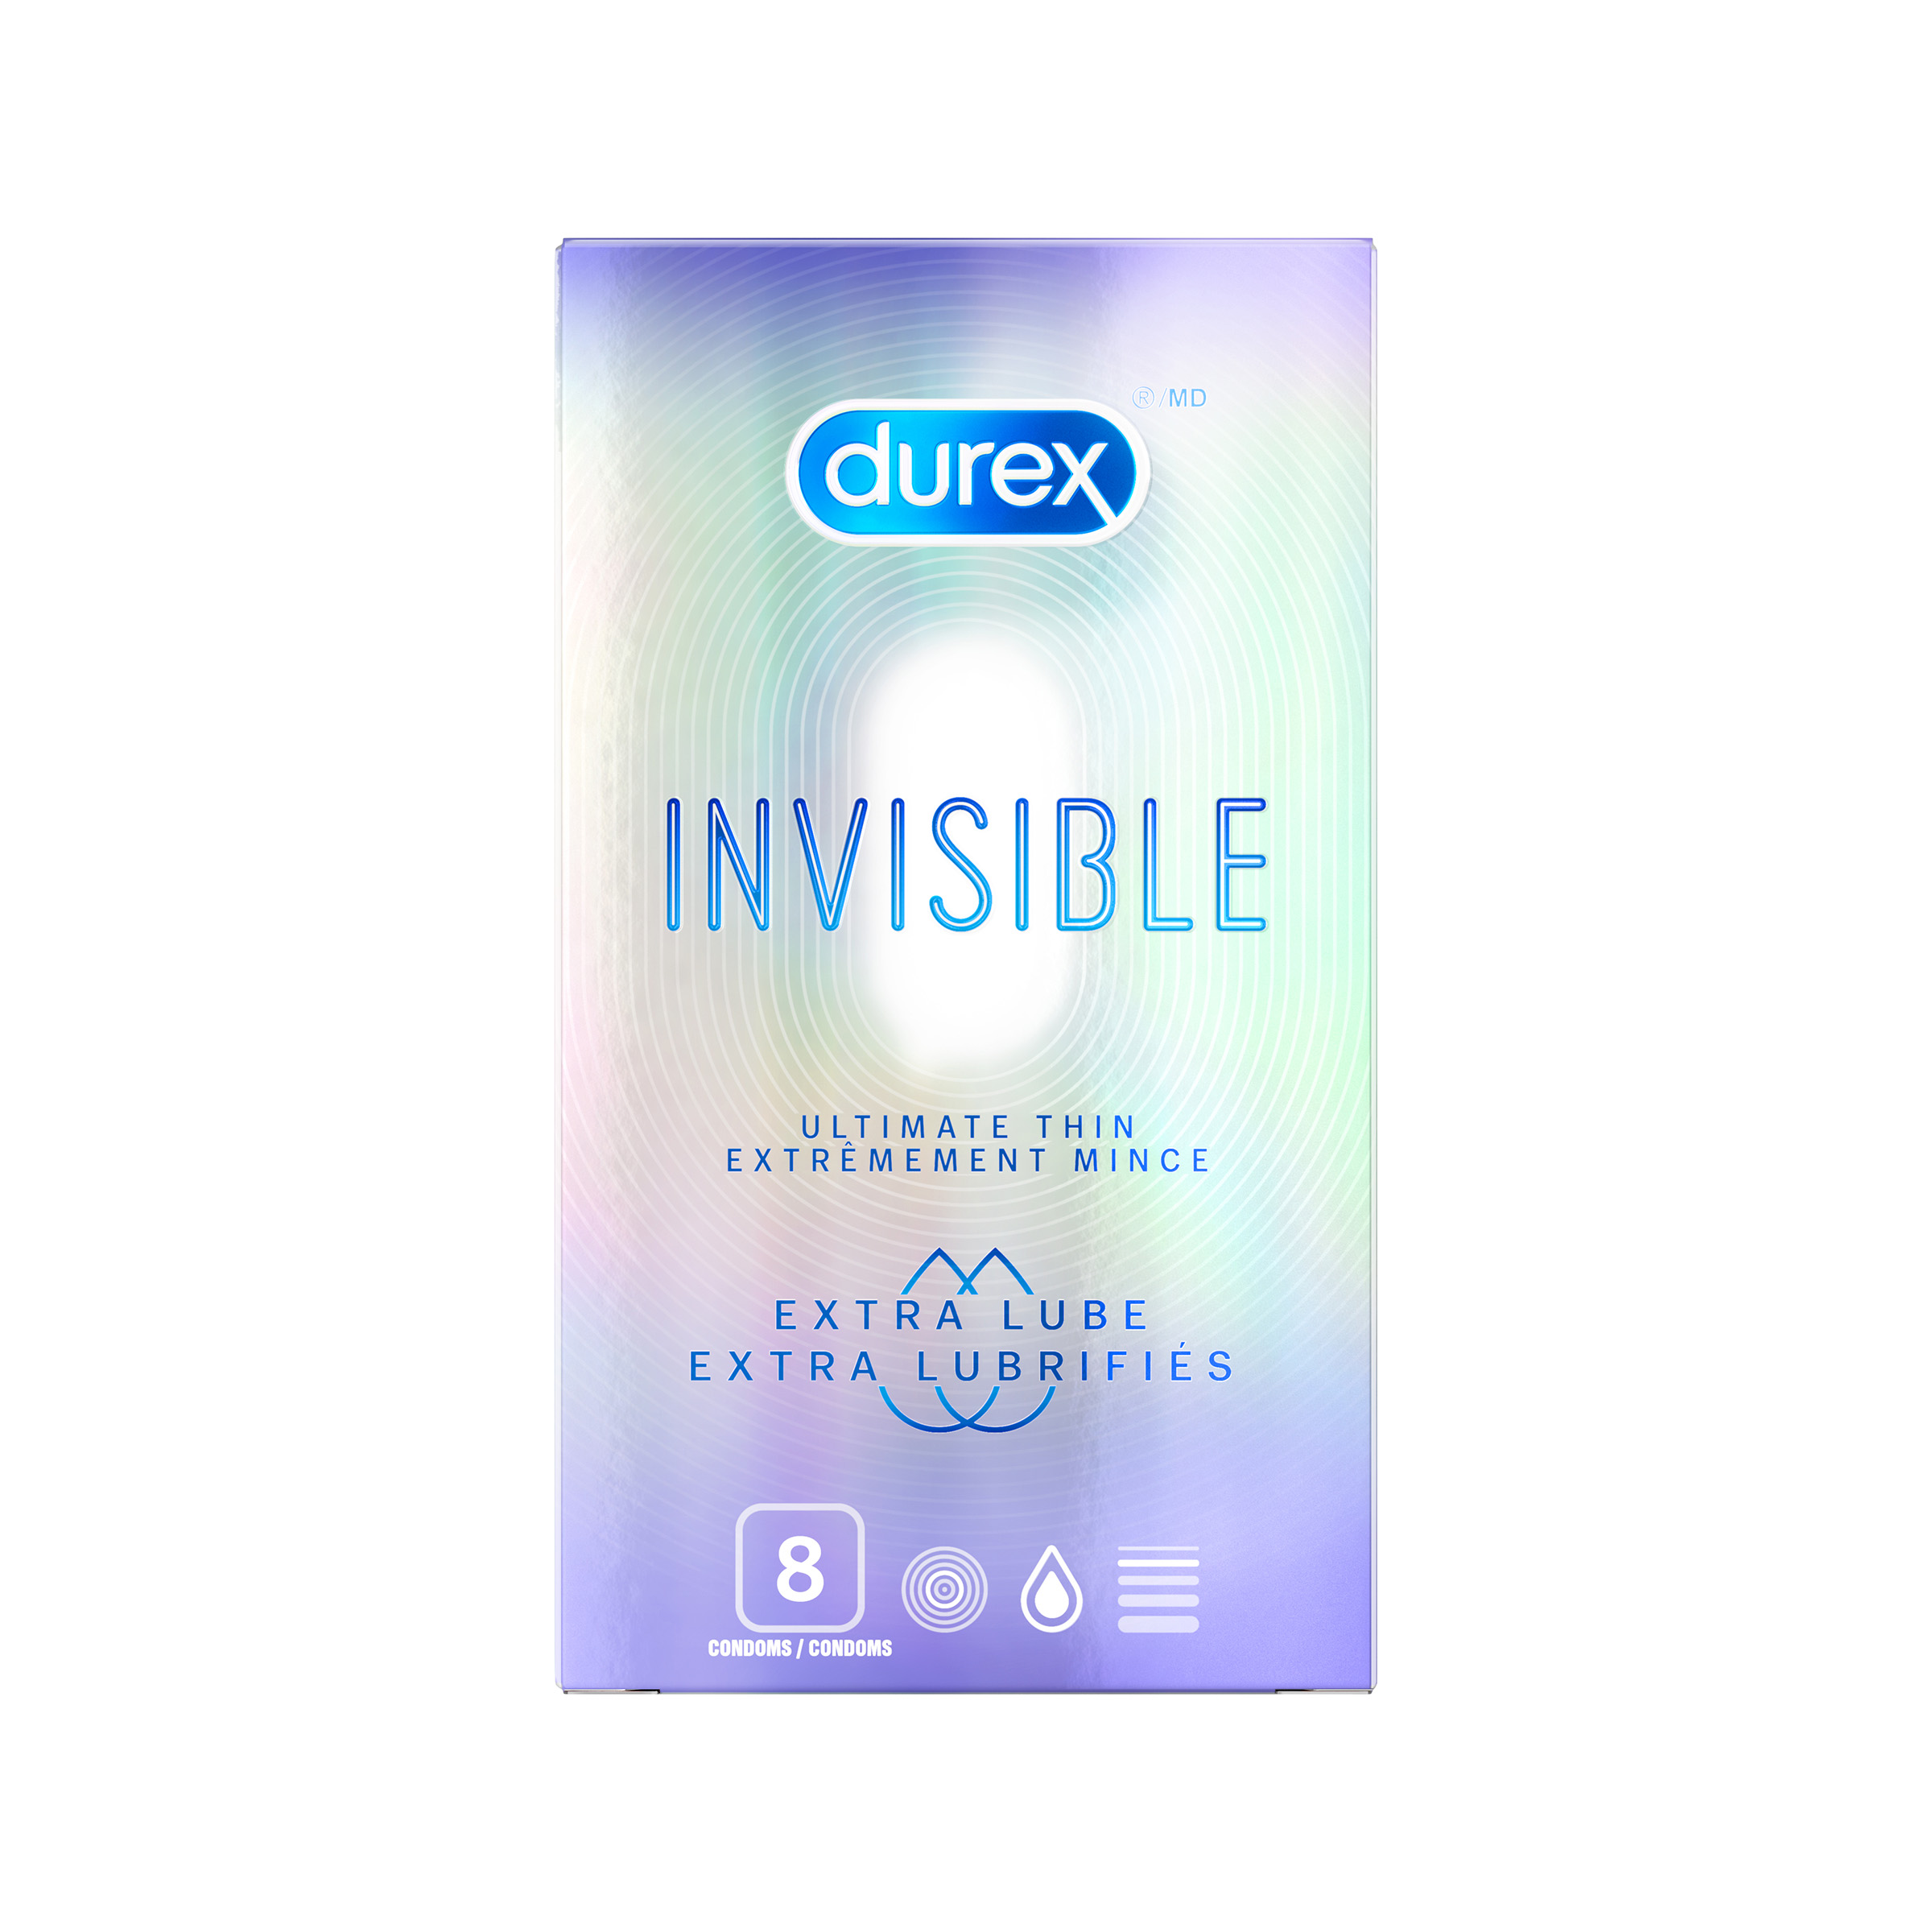 DUREX Invisible Ultimate Thin Extra Lube Condoms Canada Photo